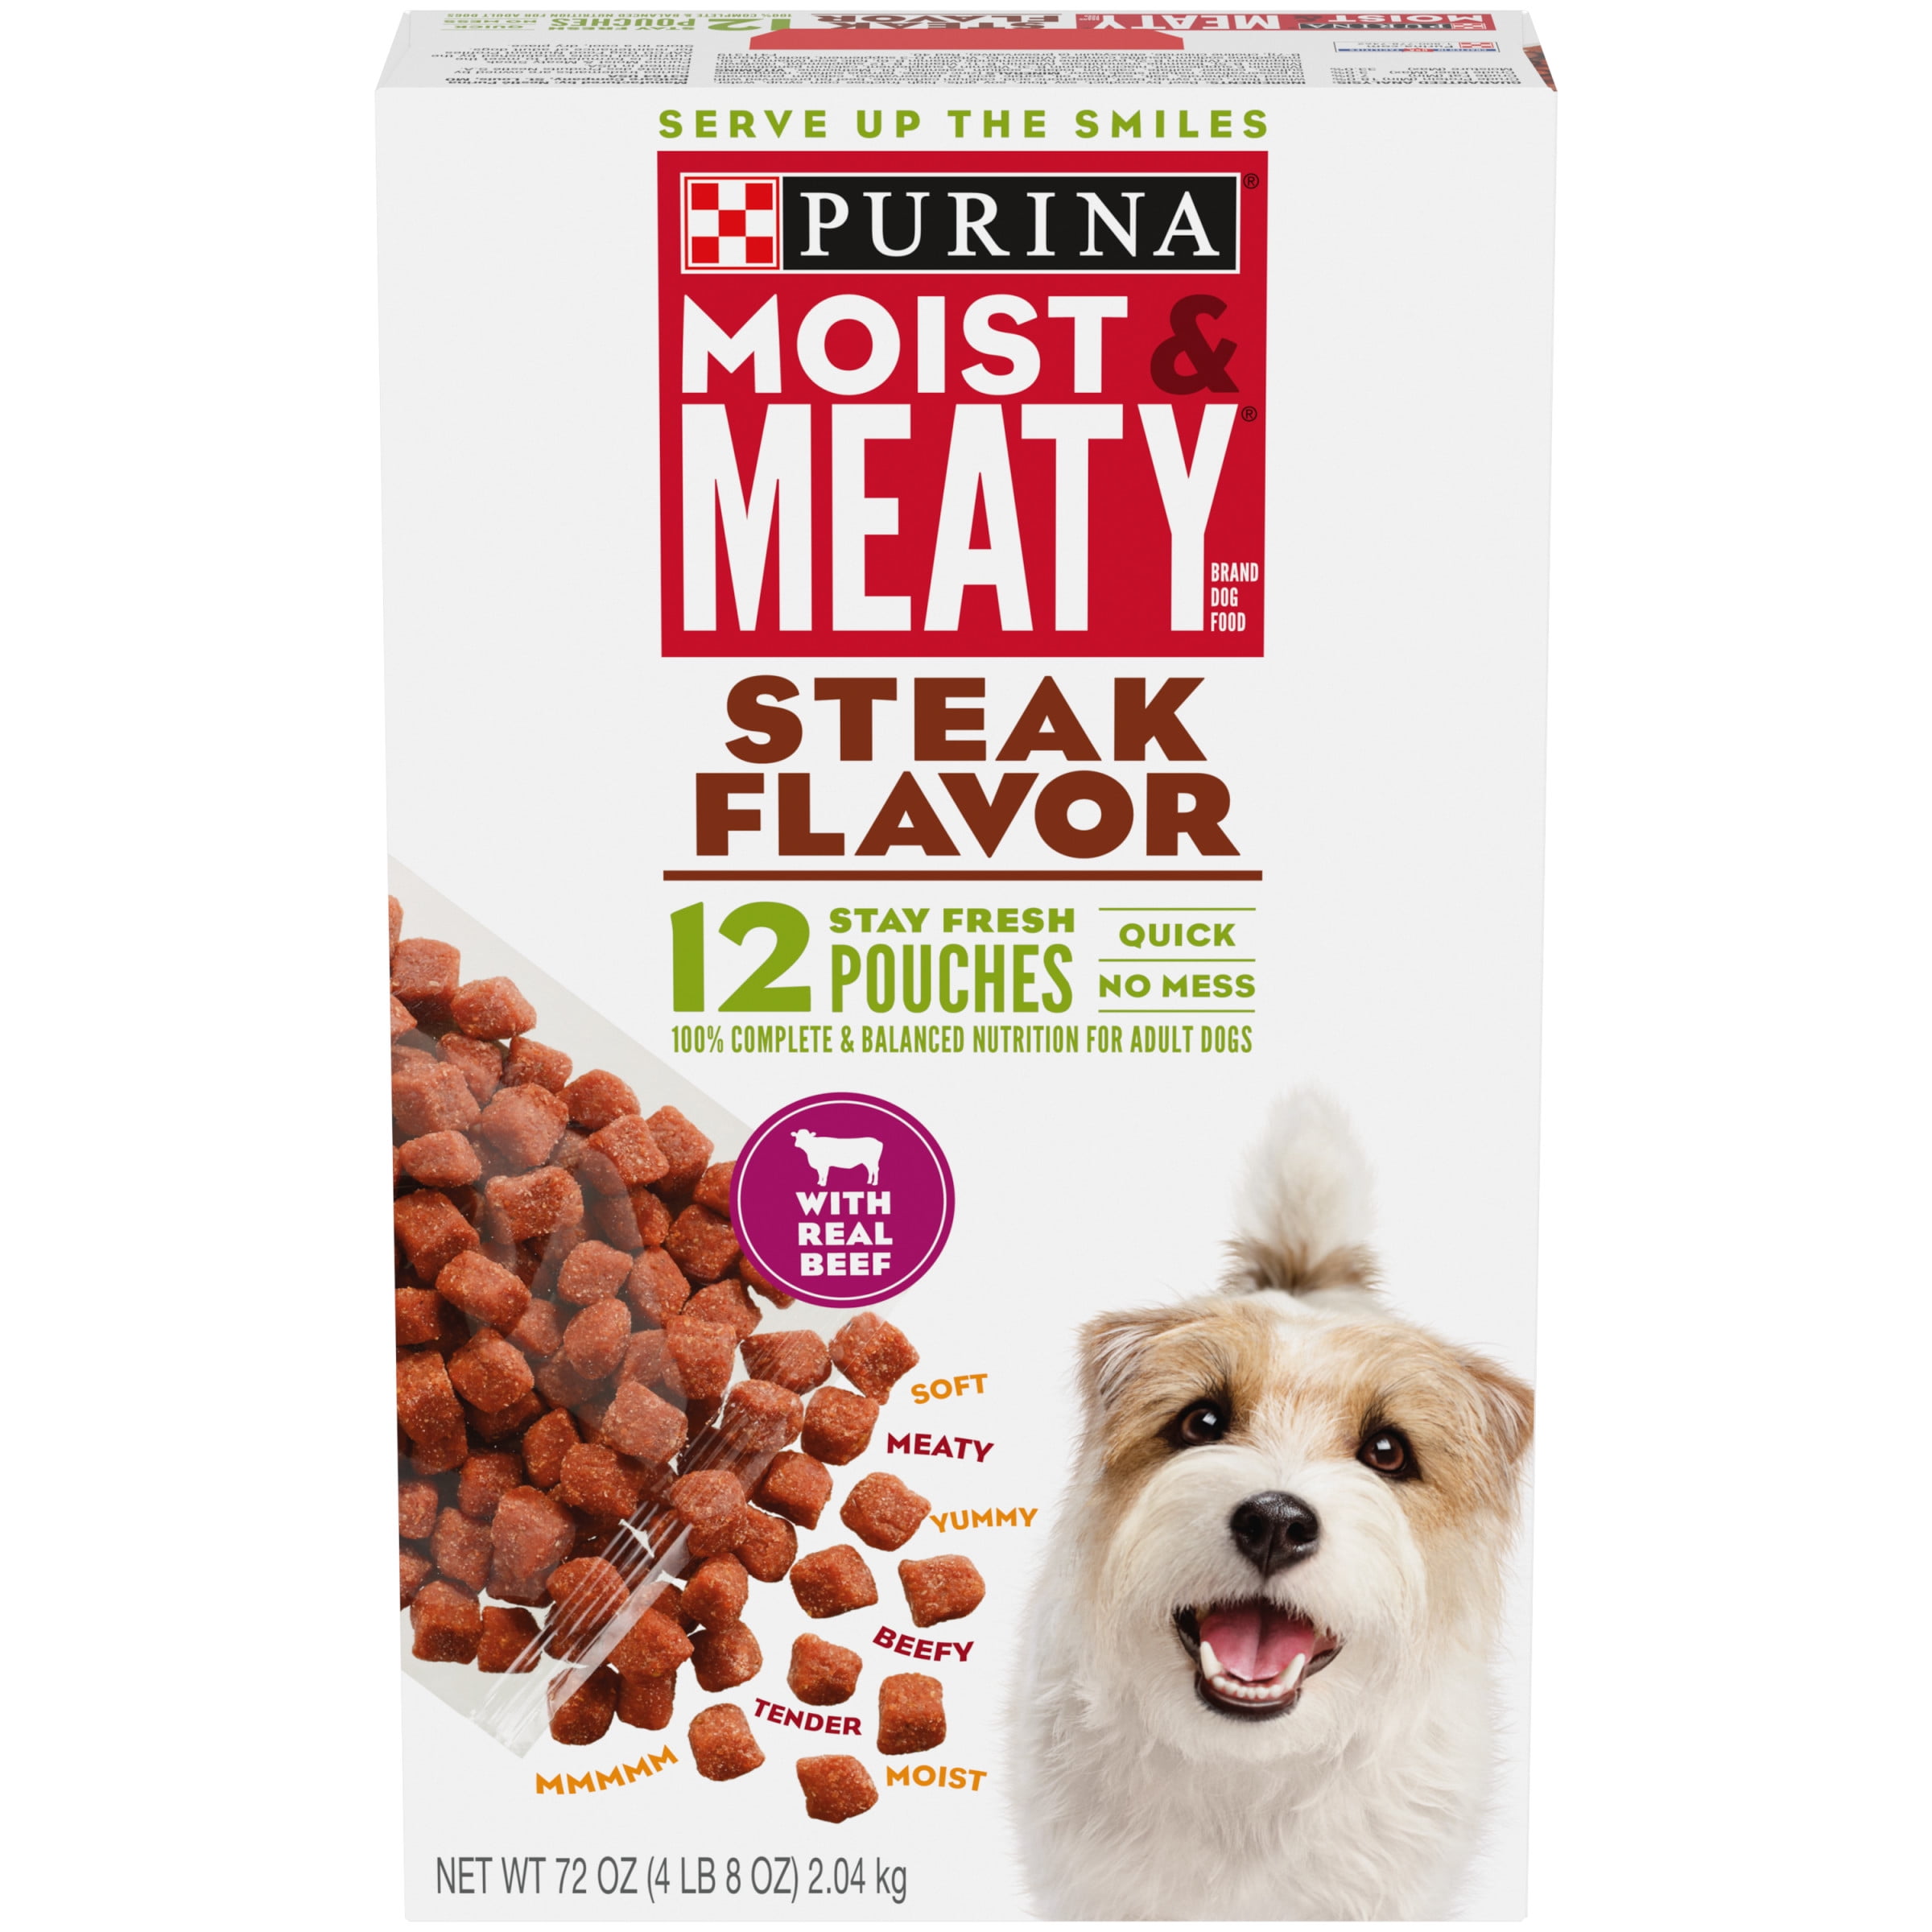 Purina Moist and Meaty Steak Flavor Beef Wet Dog Food, 72 oz